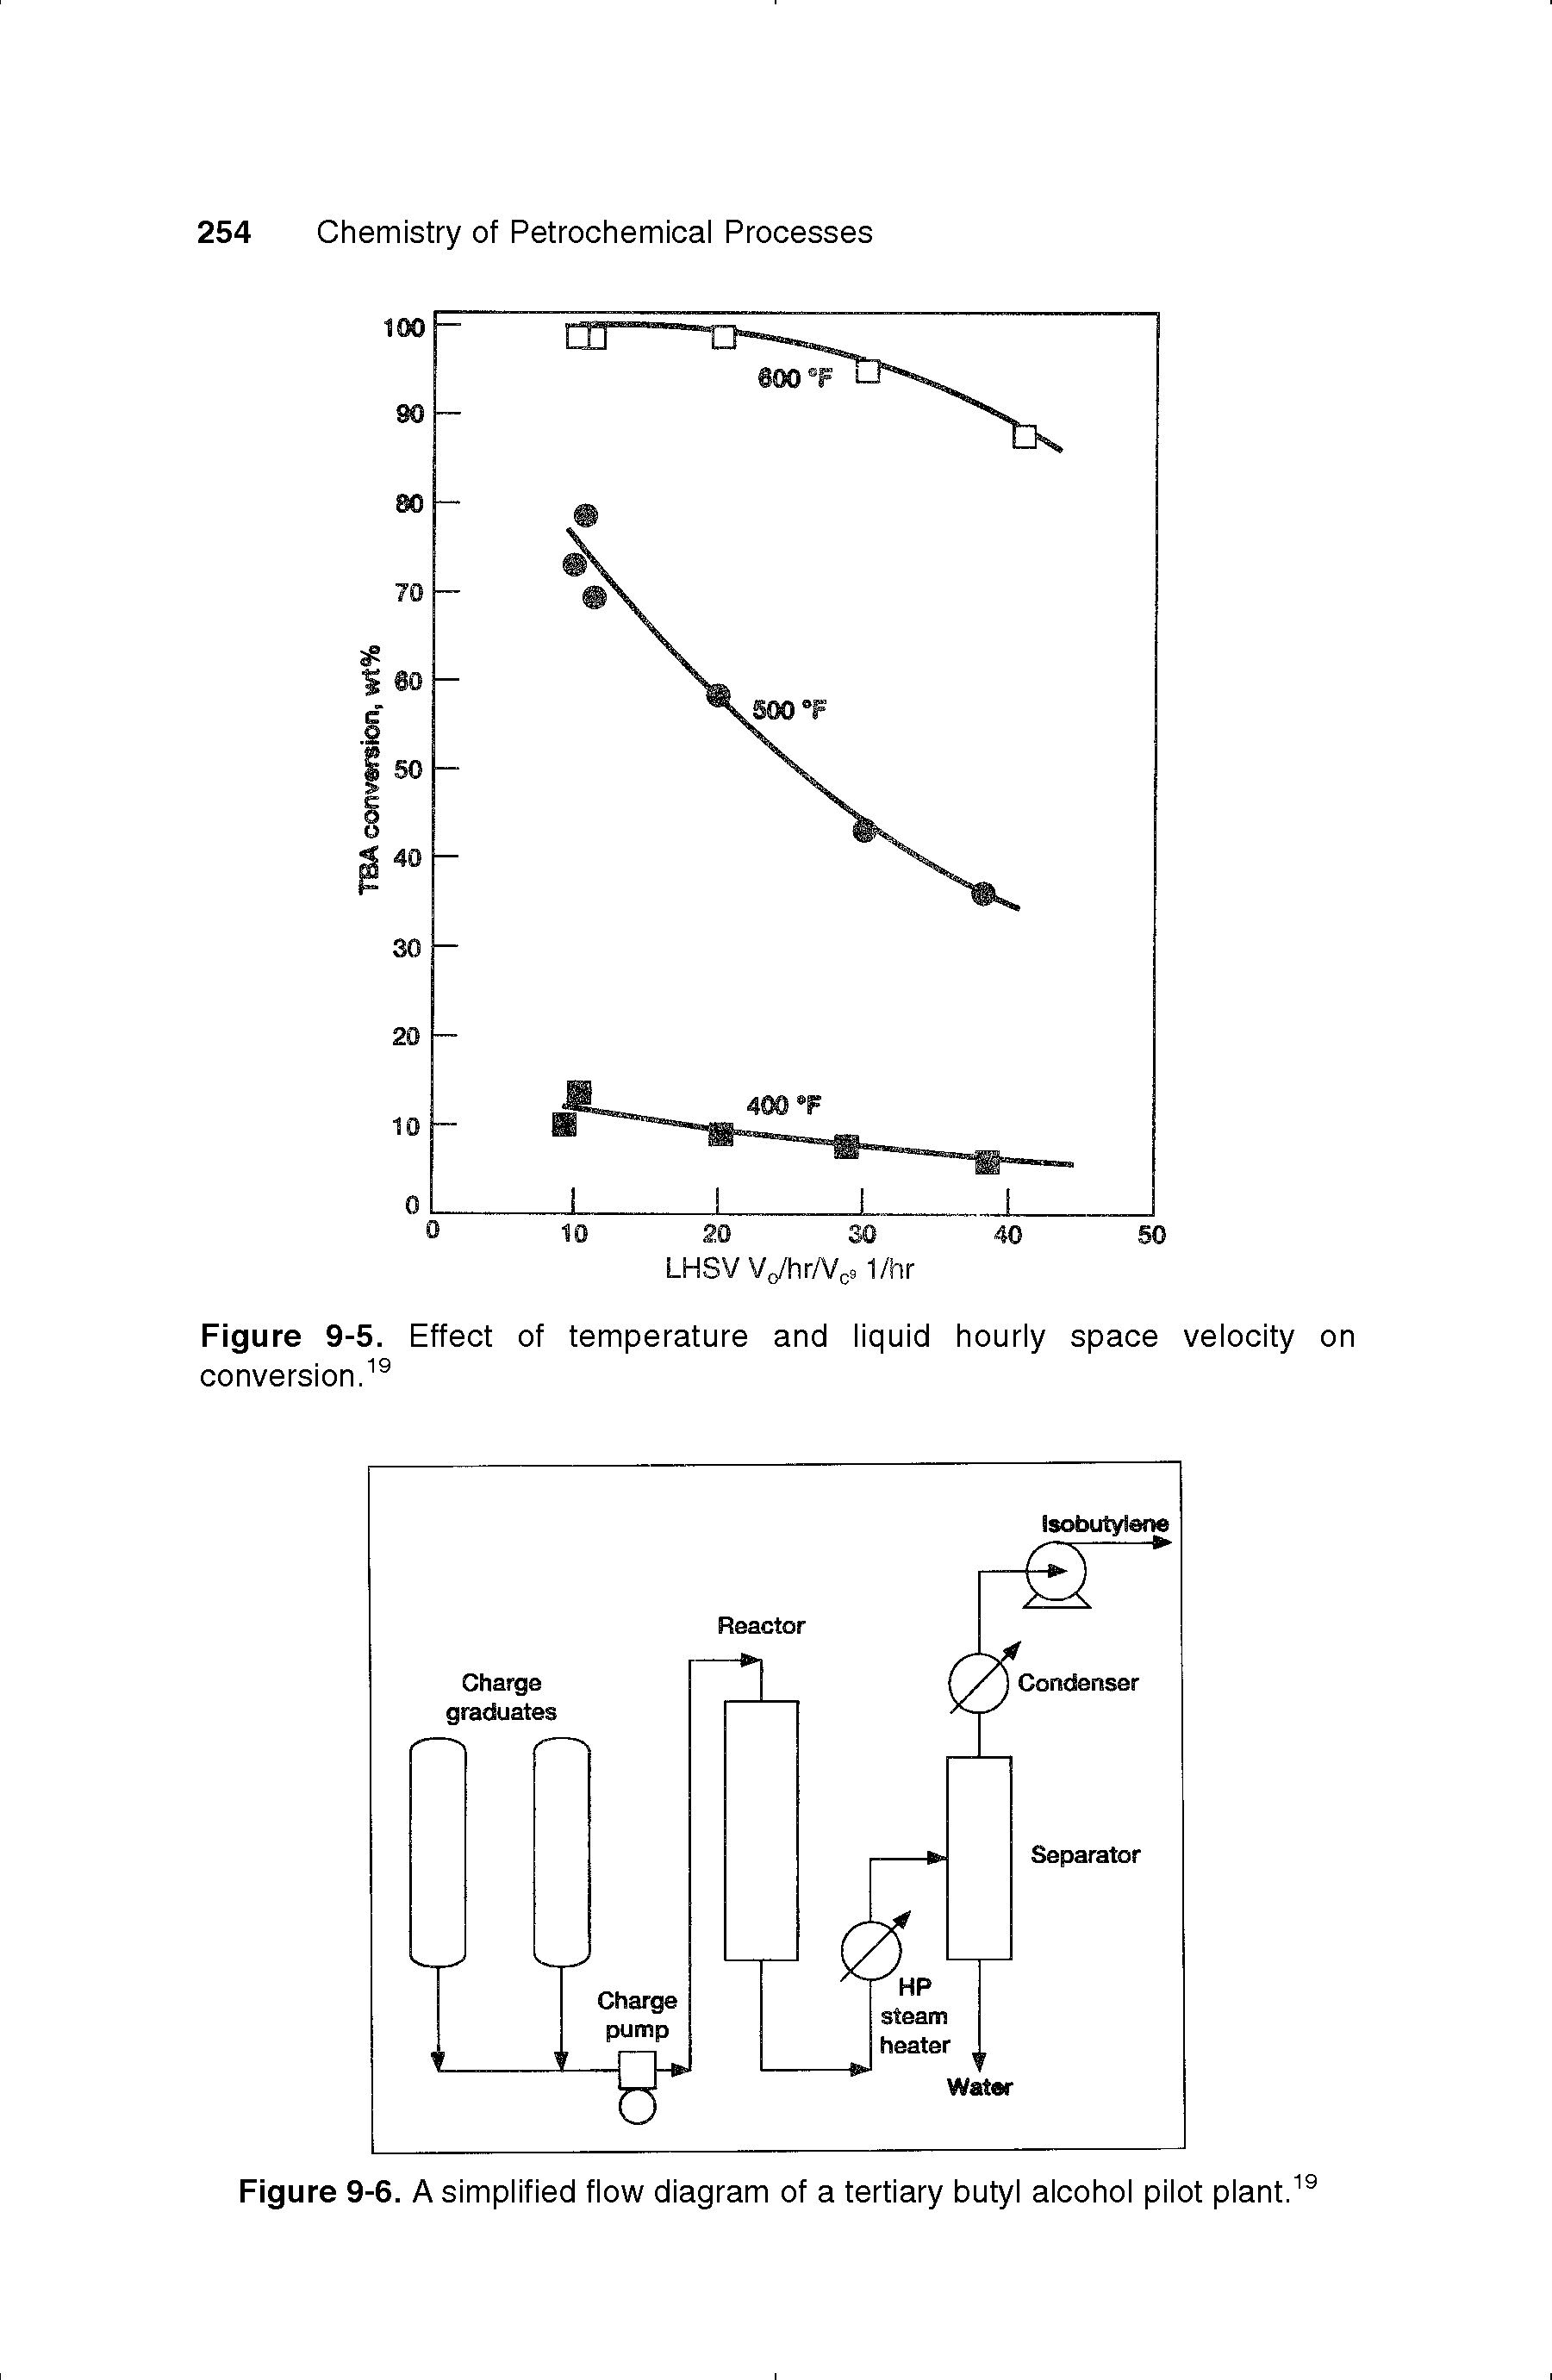 Figure 9-6. A simplified flow diagram of a tertiary butyl alcohol pilot plant.